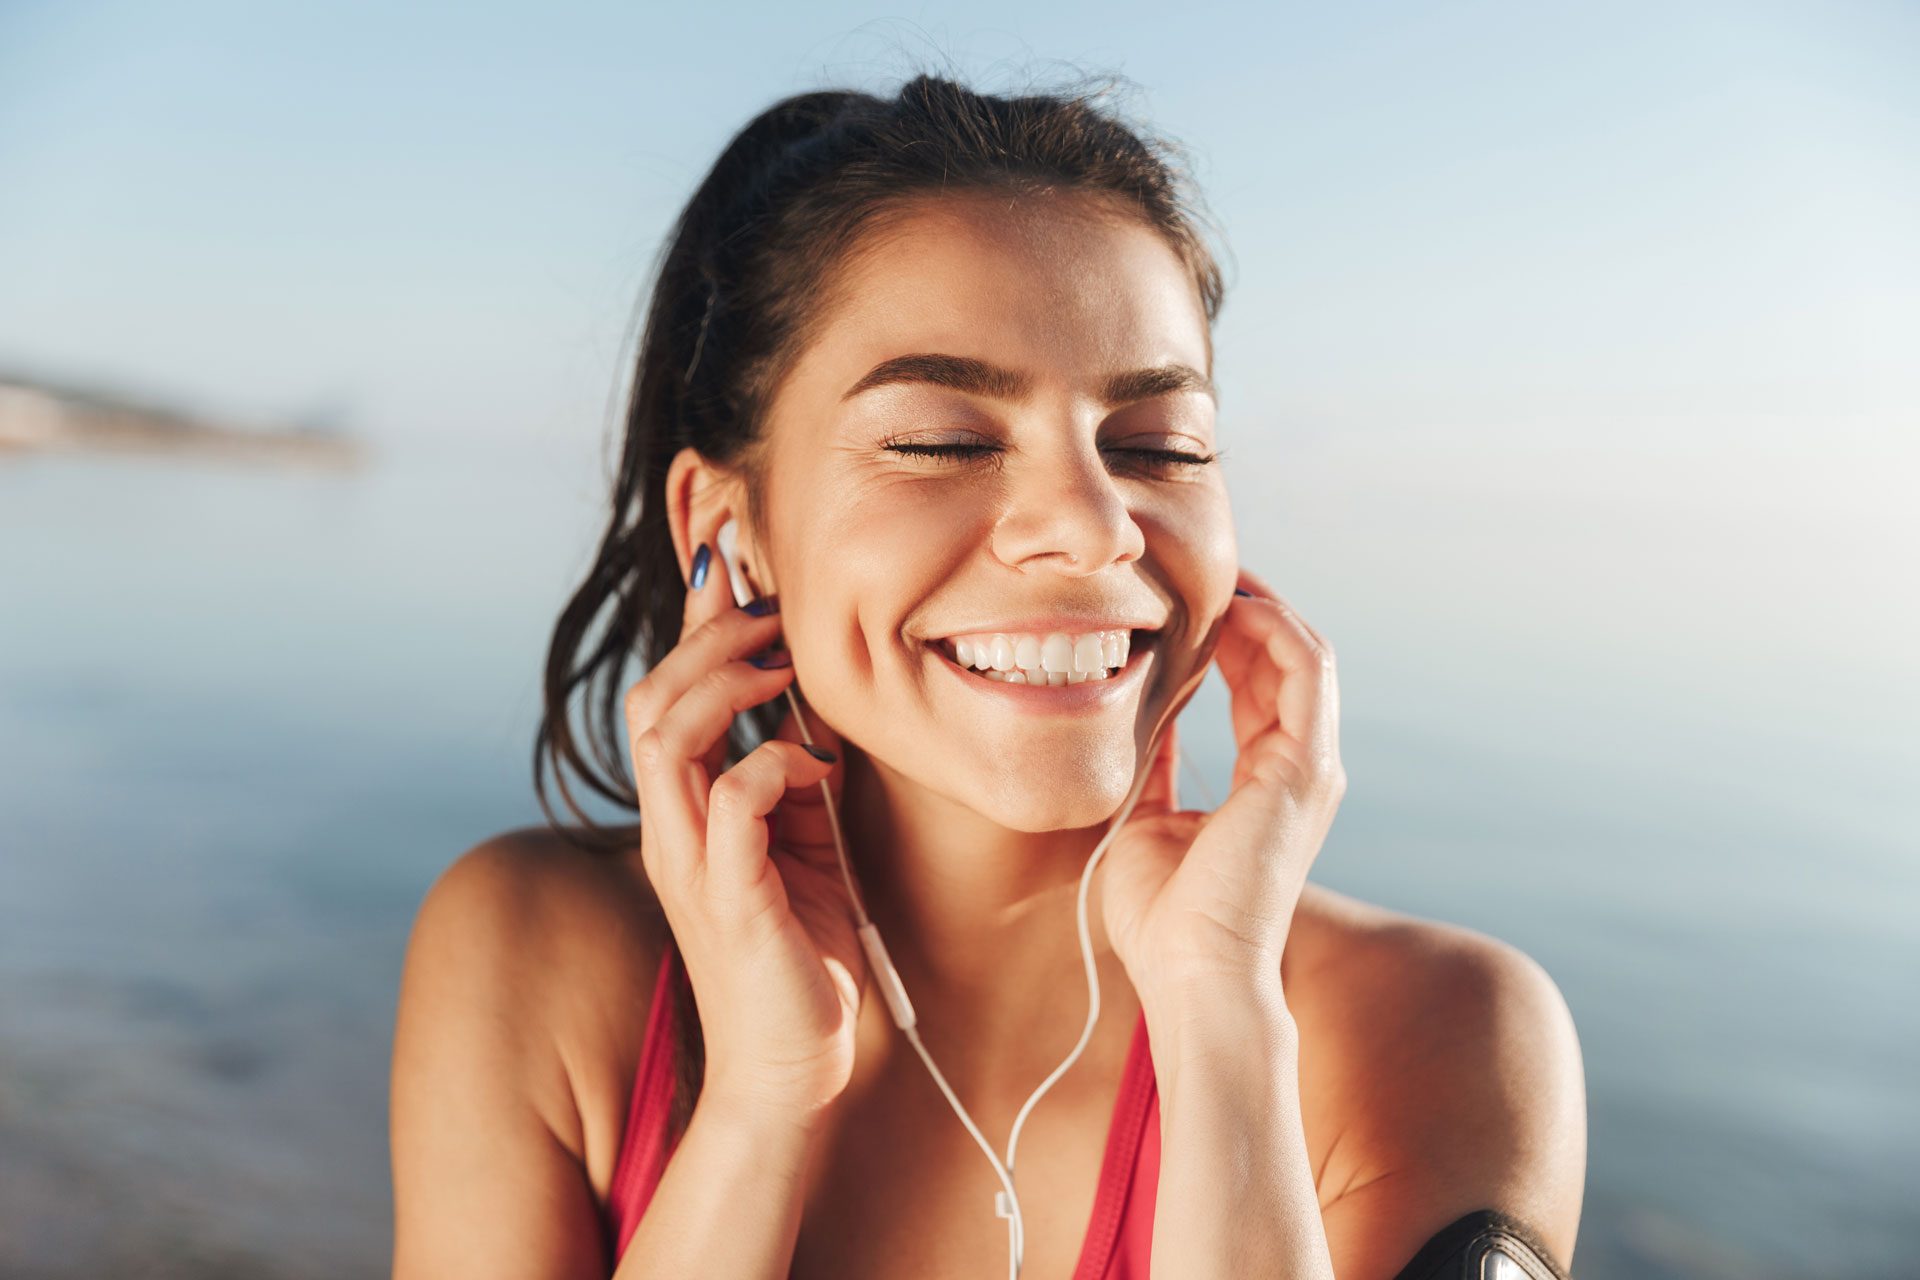 cheerful-sports-woman-listening-music-in-earphones-FJH6PY8.jpg